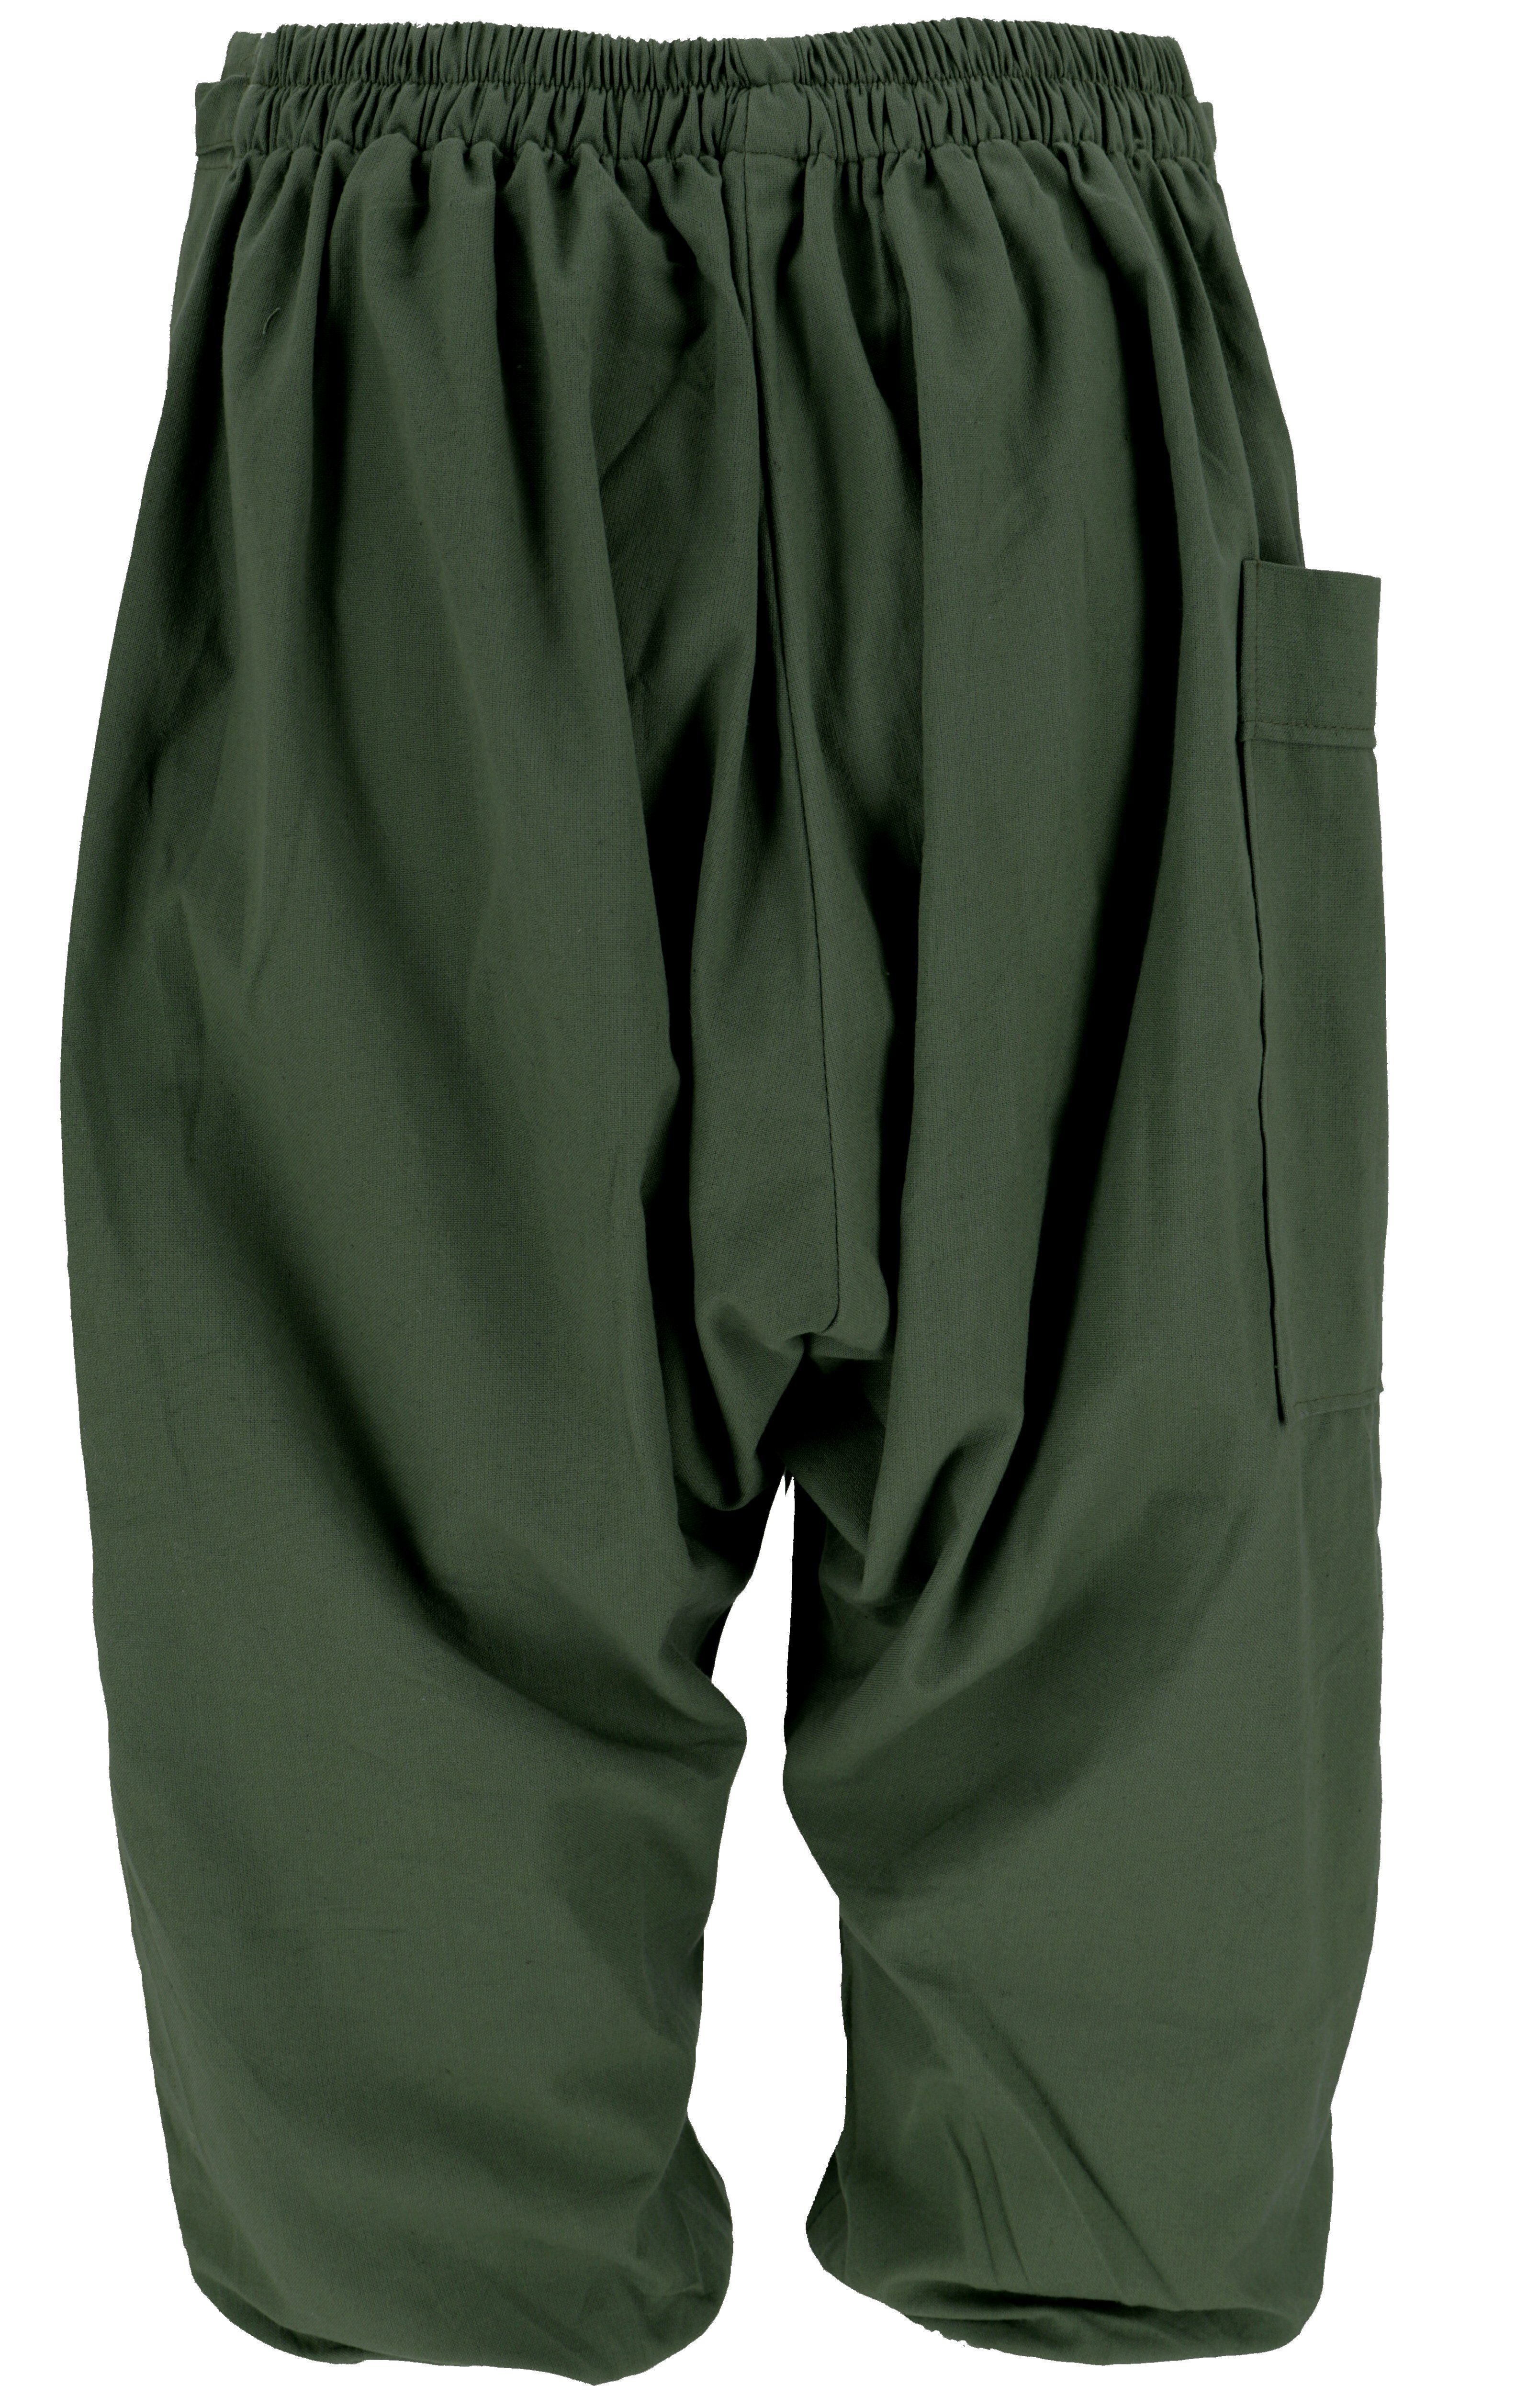 Ethno Hose Sarouel alternative Bekleidung Shorts, Relaxhose Baggy khakigrün Style, Guru-Shop -